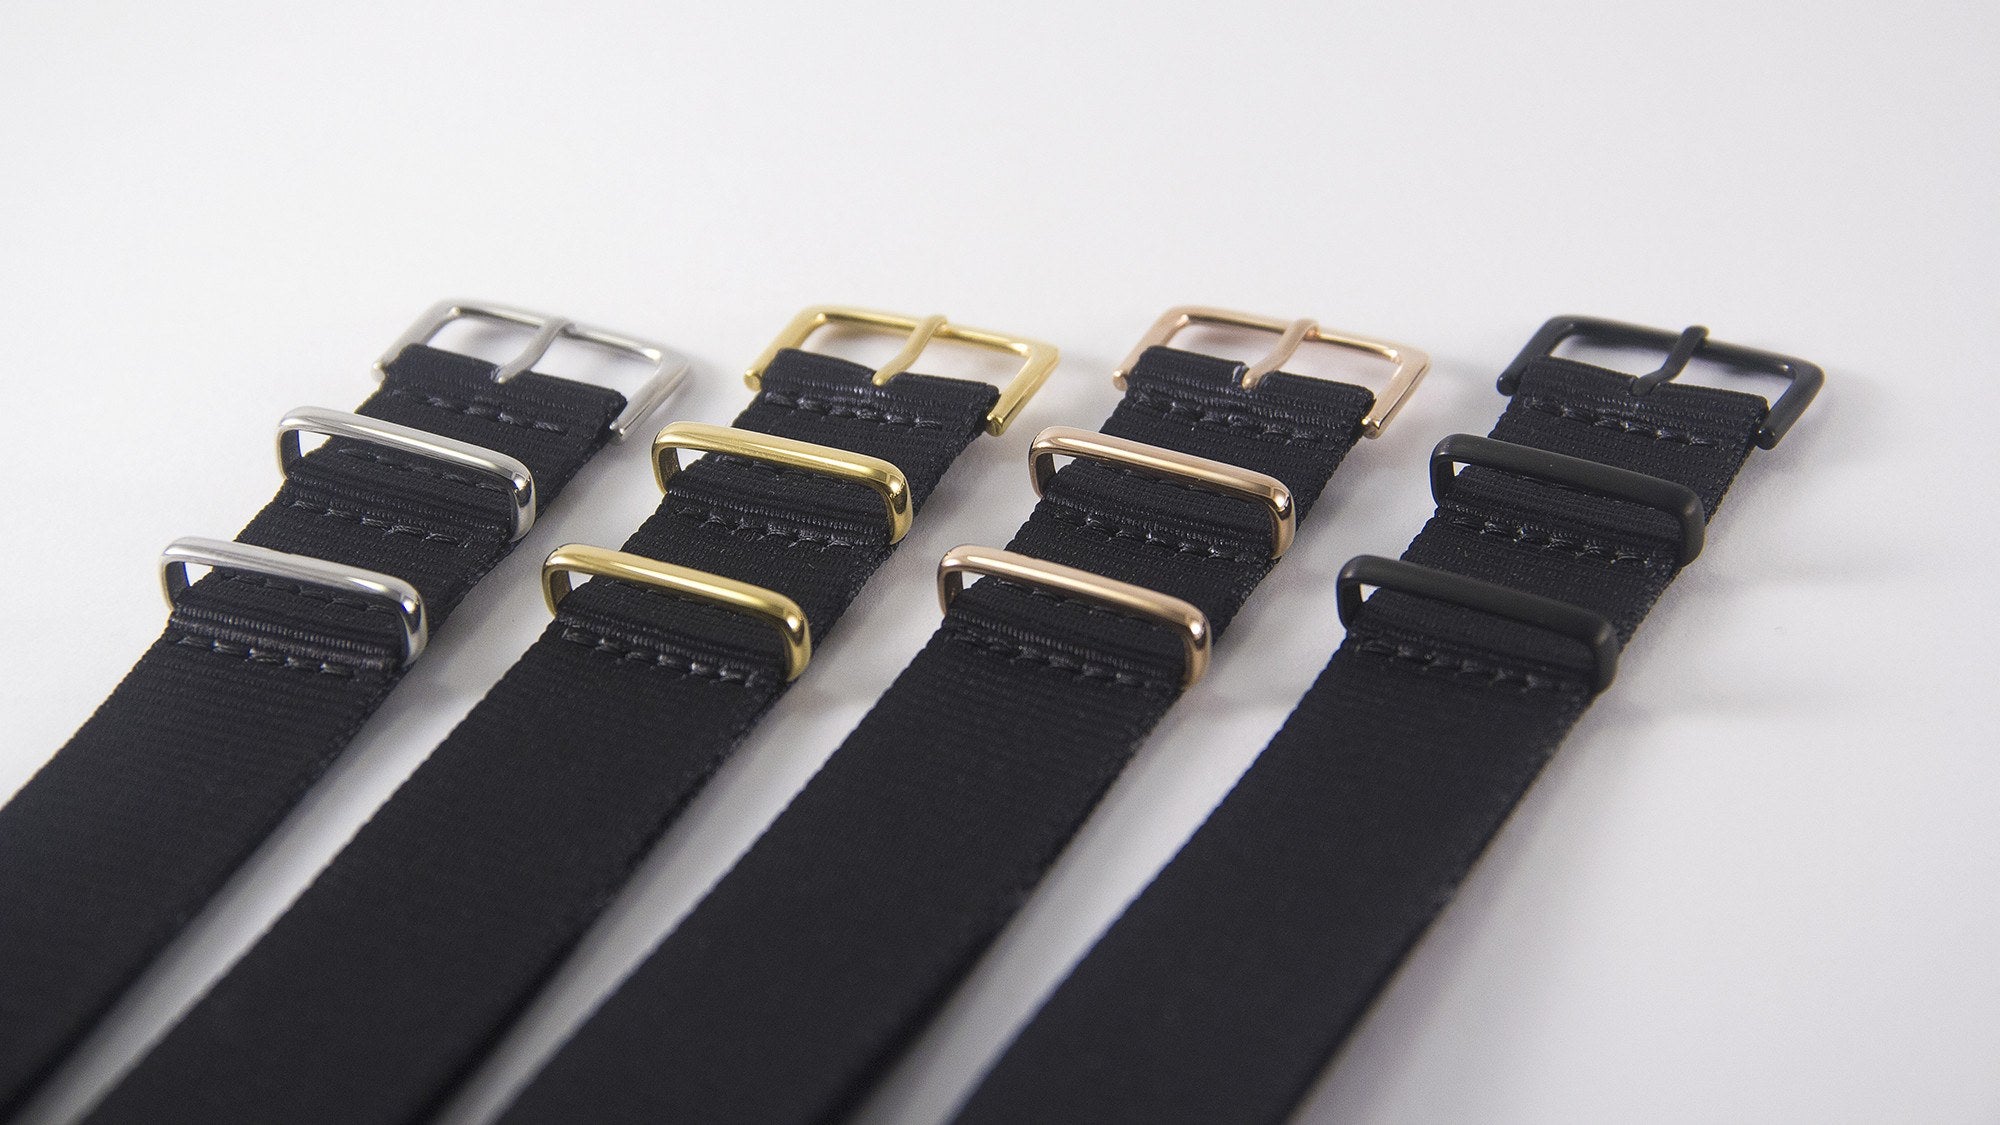 vario black razor printed strap with different metal buckles